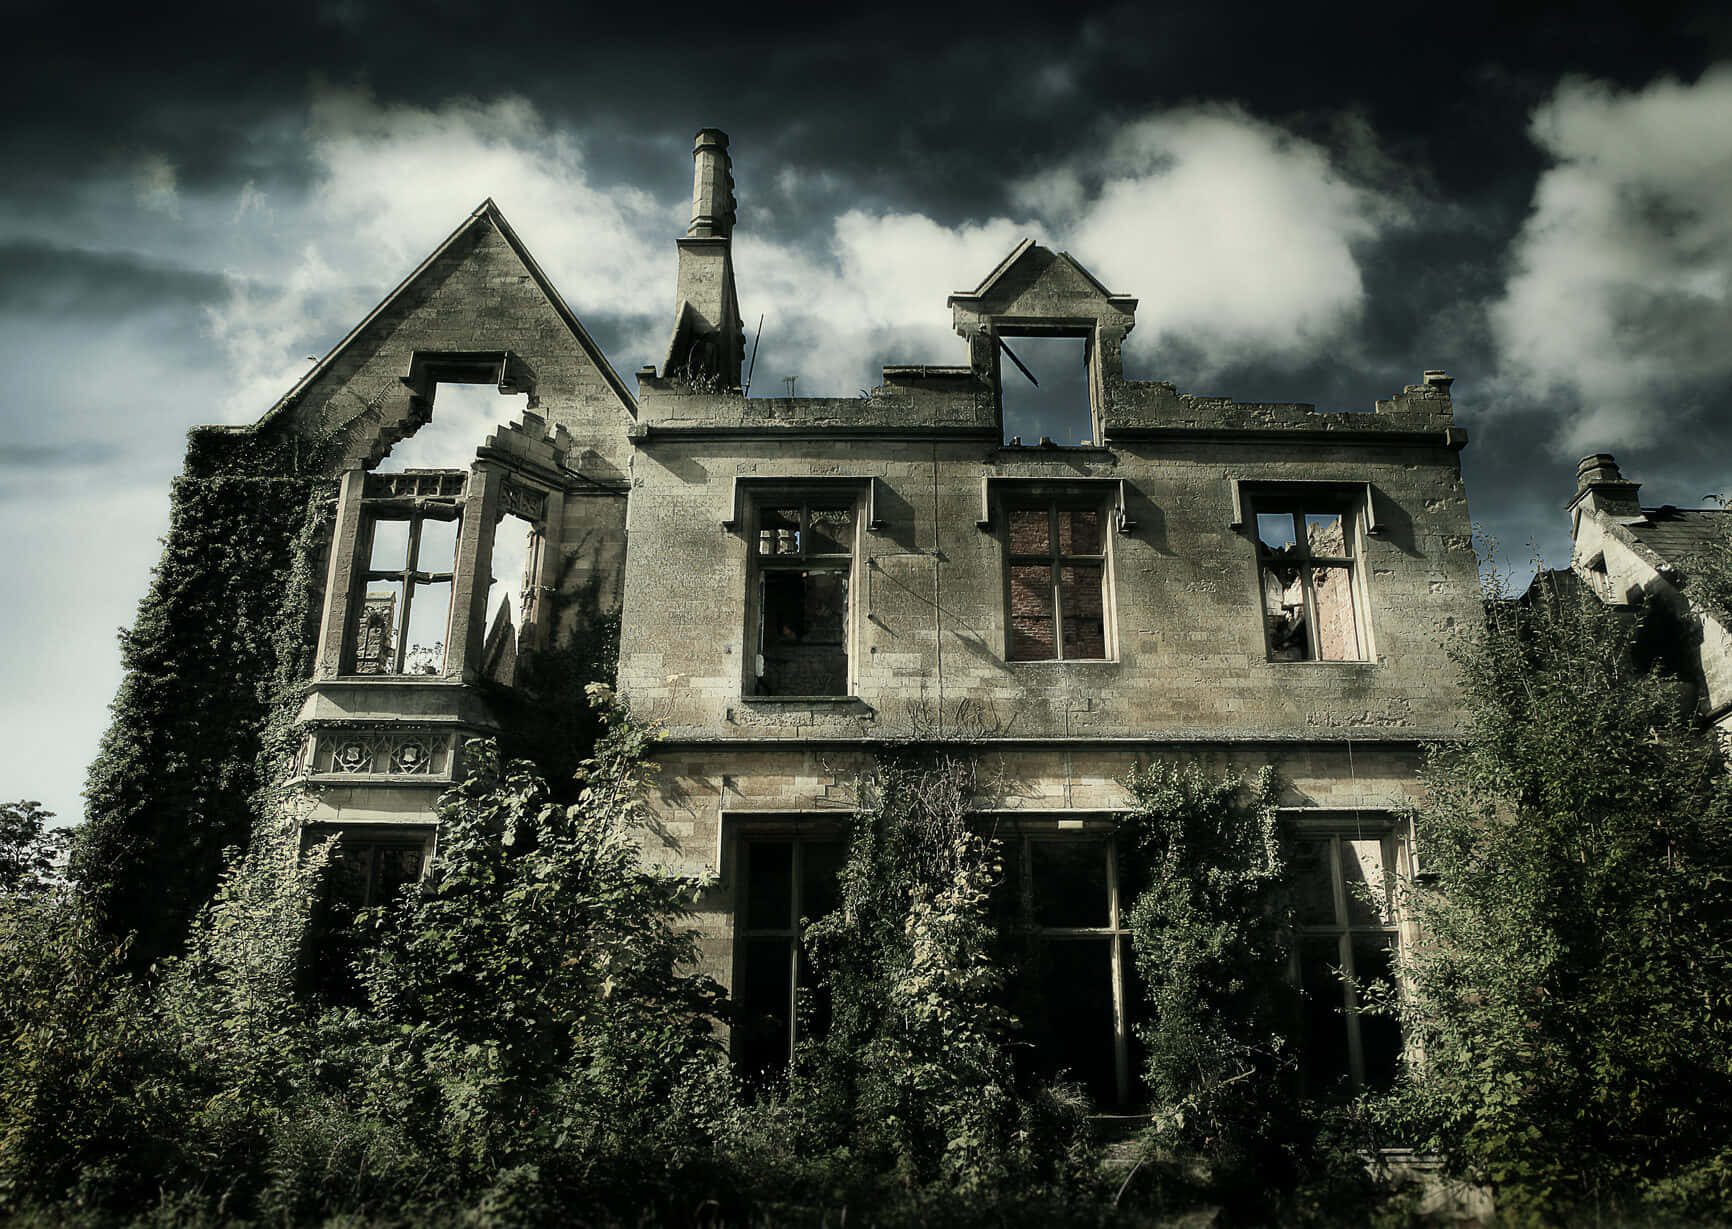 Walk through a creepy haunted house if you dare!